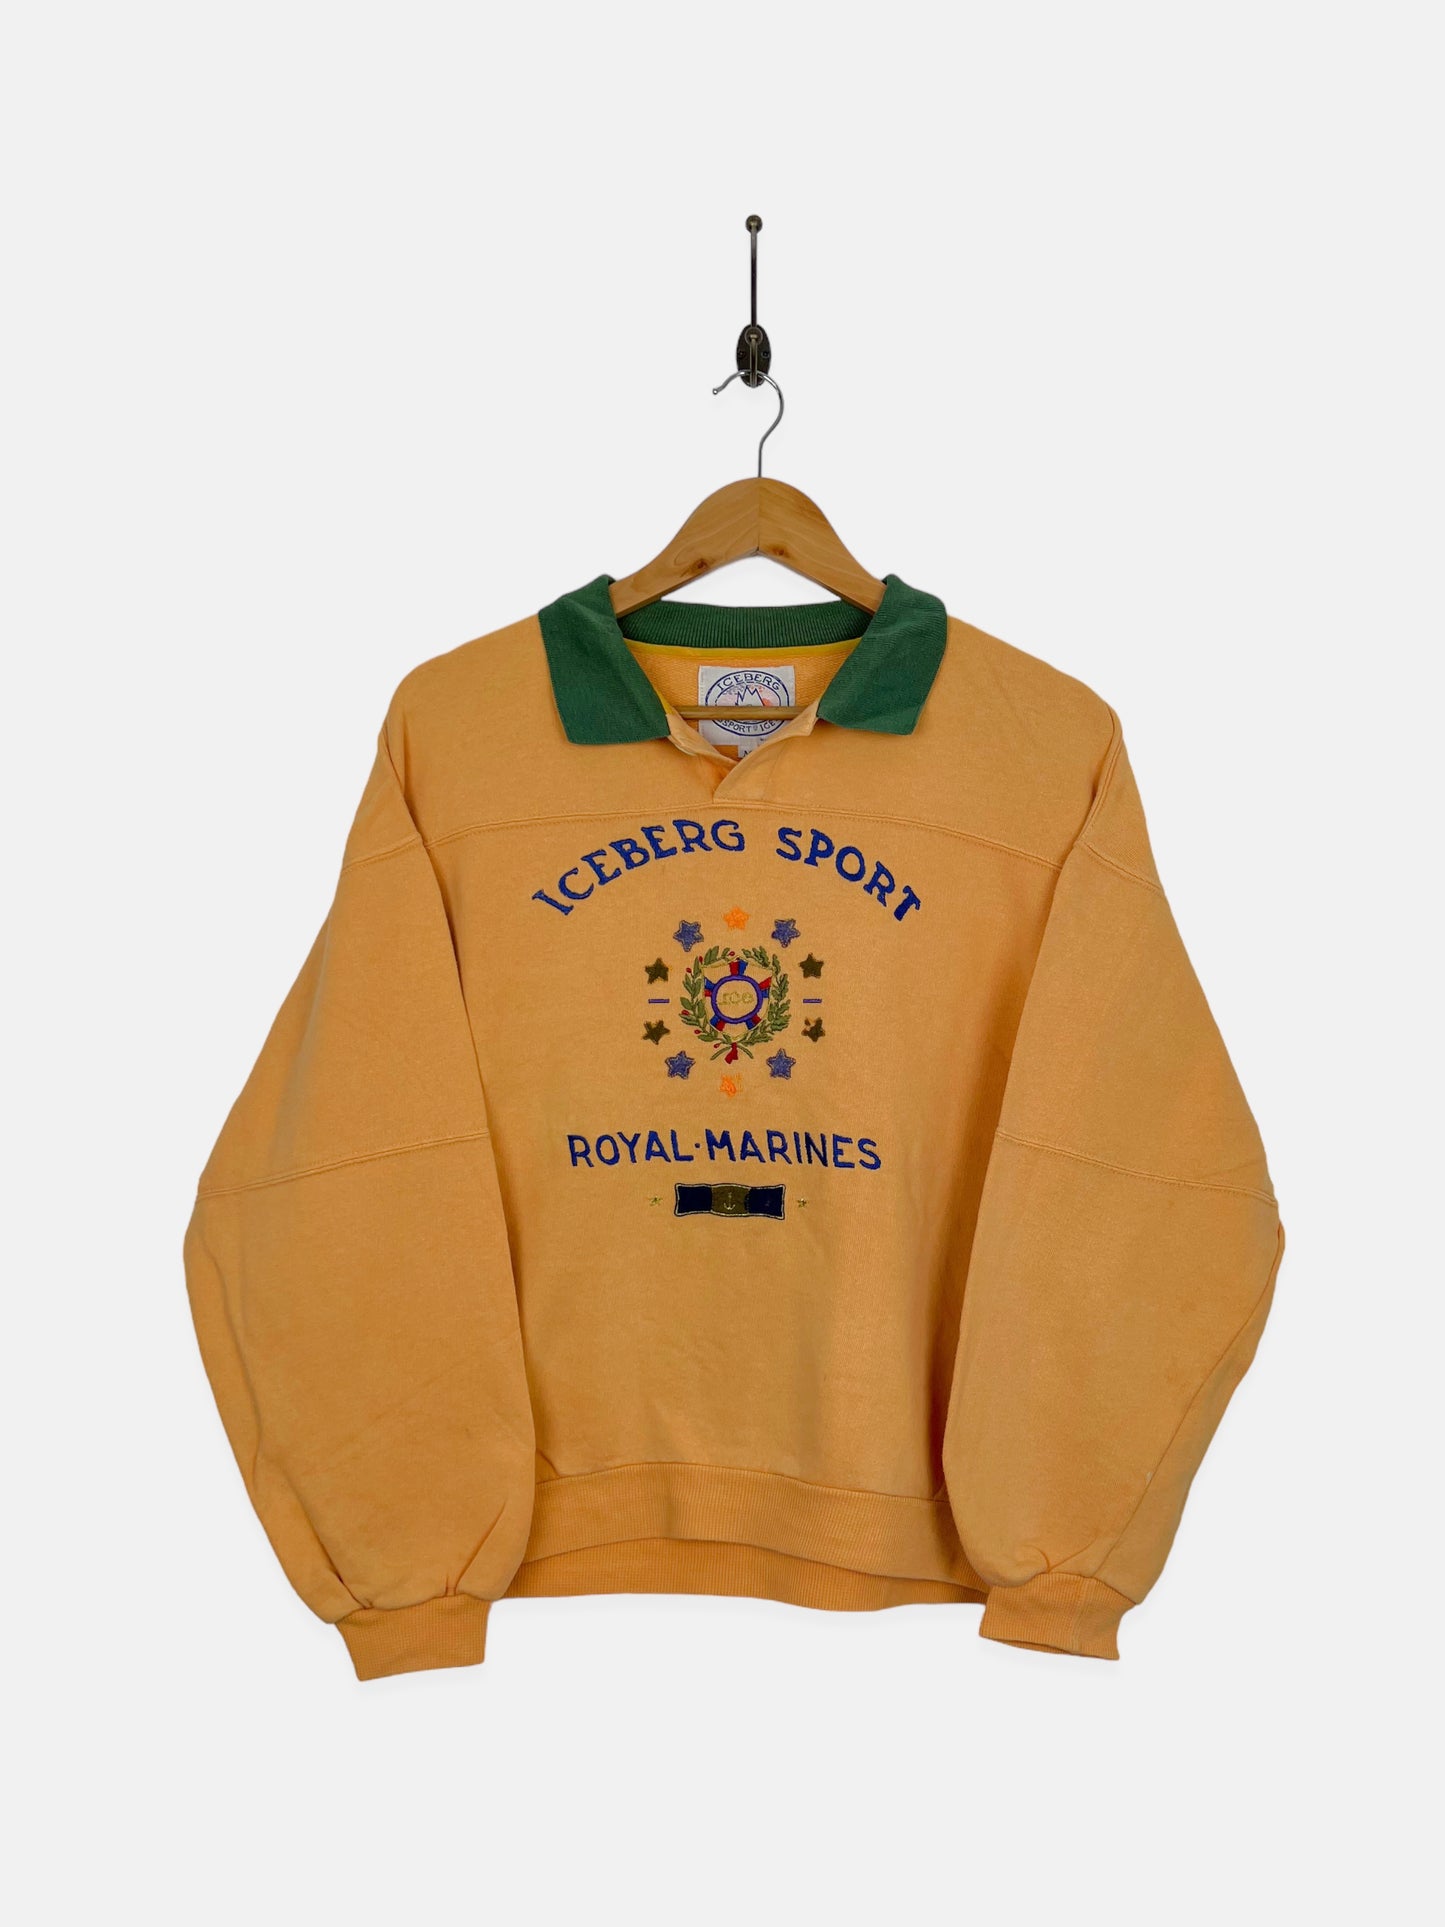 90's Iceberg Sport Royal Marines Embroidered Vintage Collared Sweatshirt Size 8-10